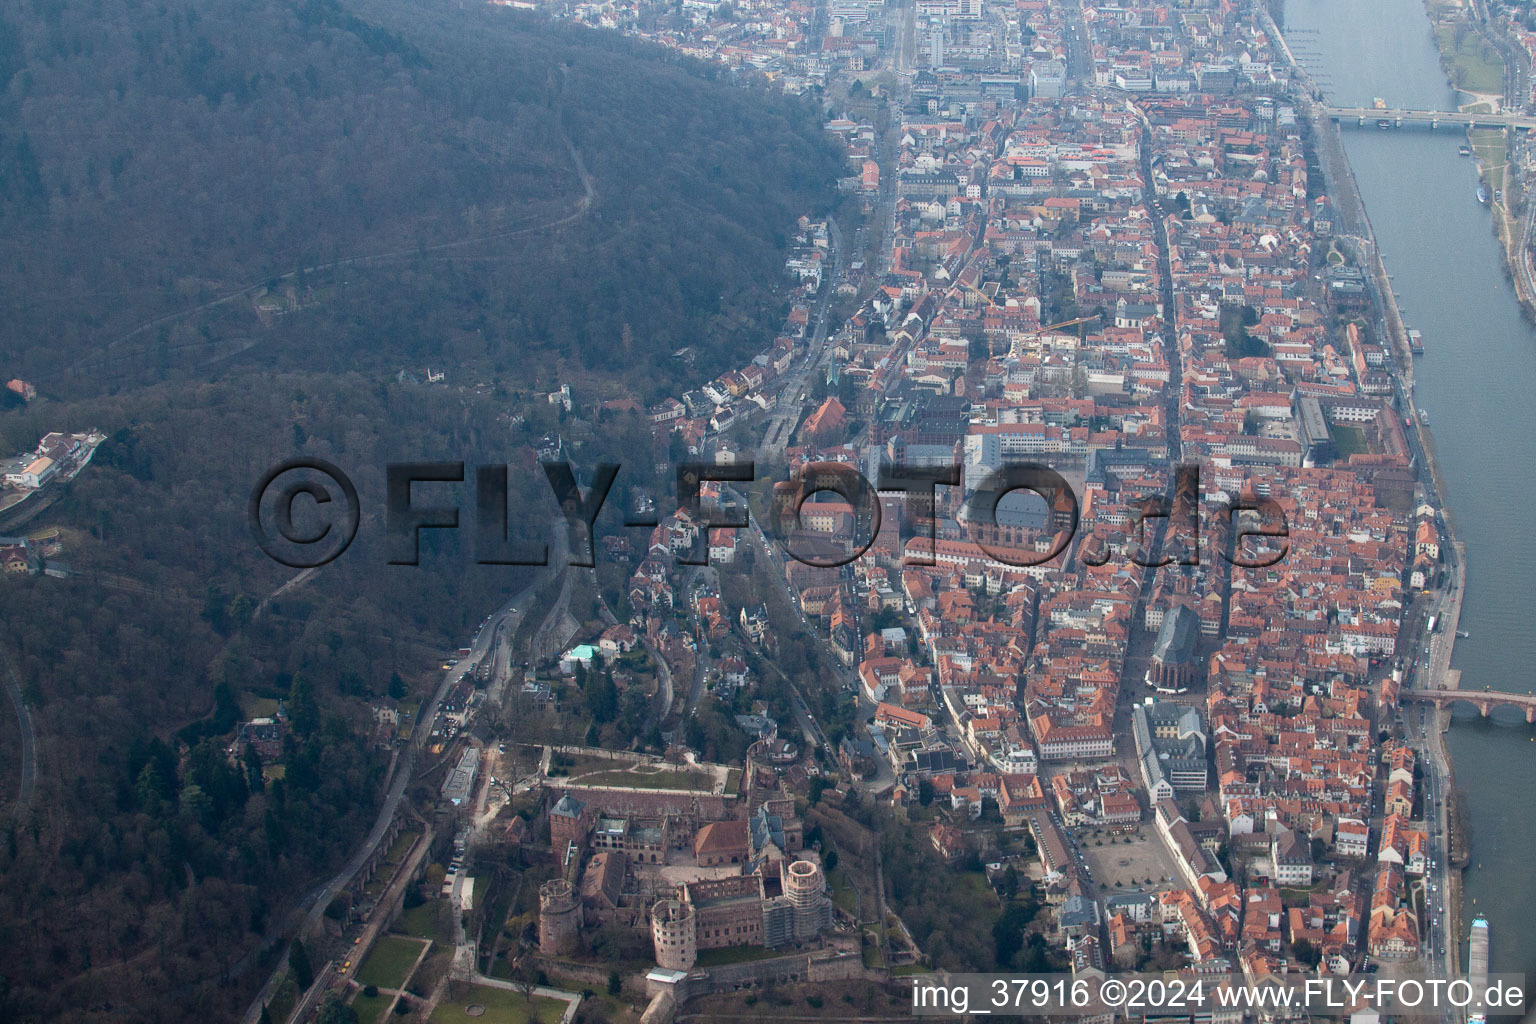 Old town in the district Kernaltstadt in Heidelberg in the state Baden-Wuerttemberg, Germany